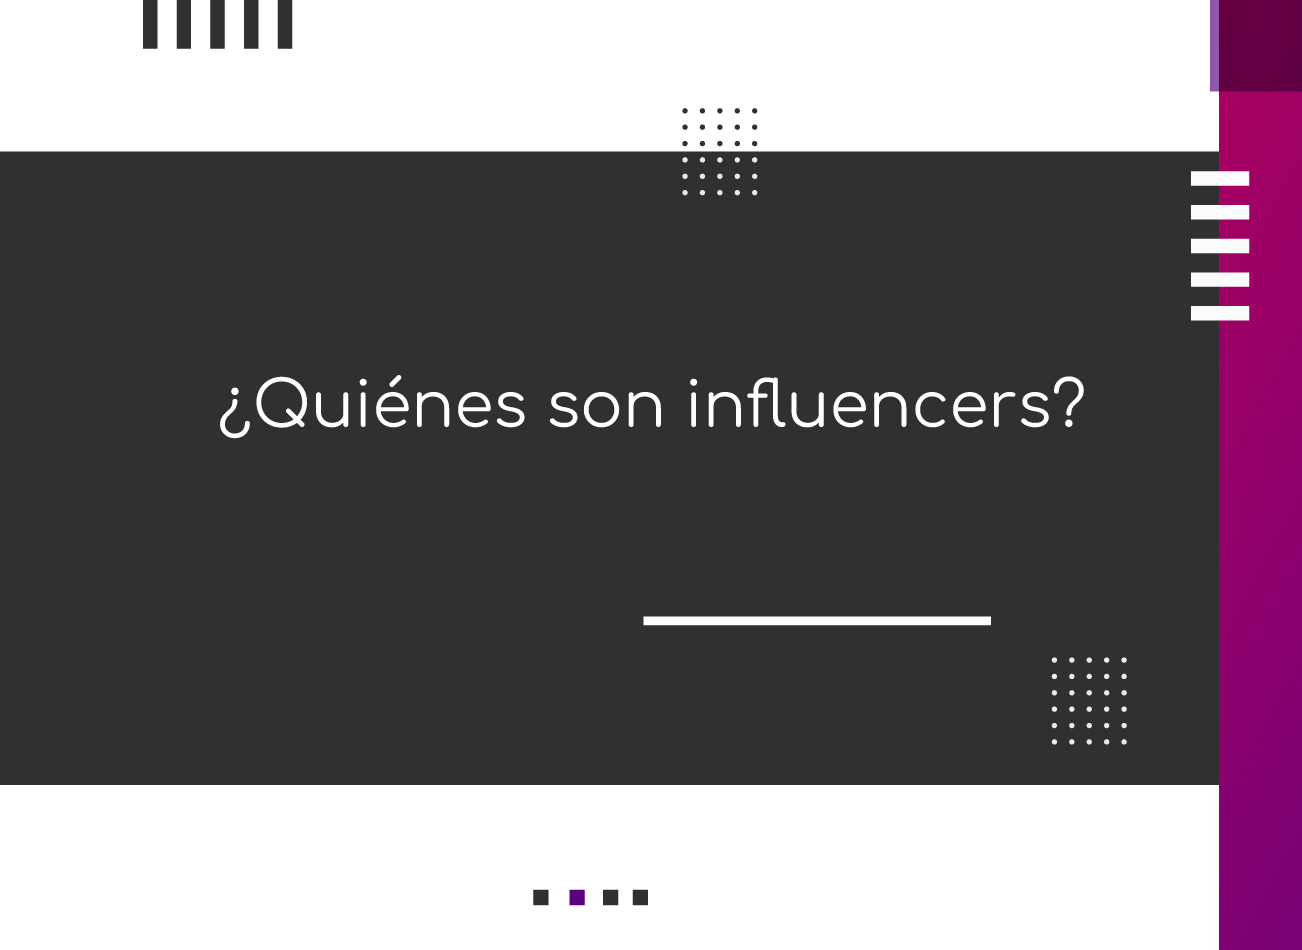 ¿Quiénes son influencers?